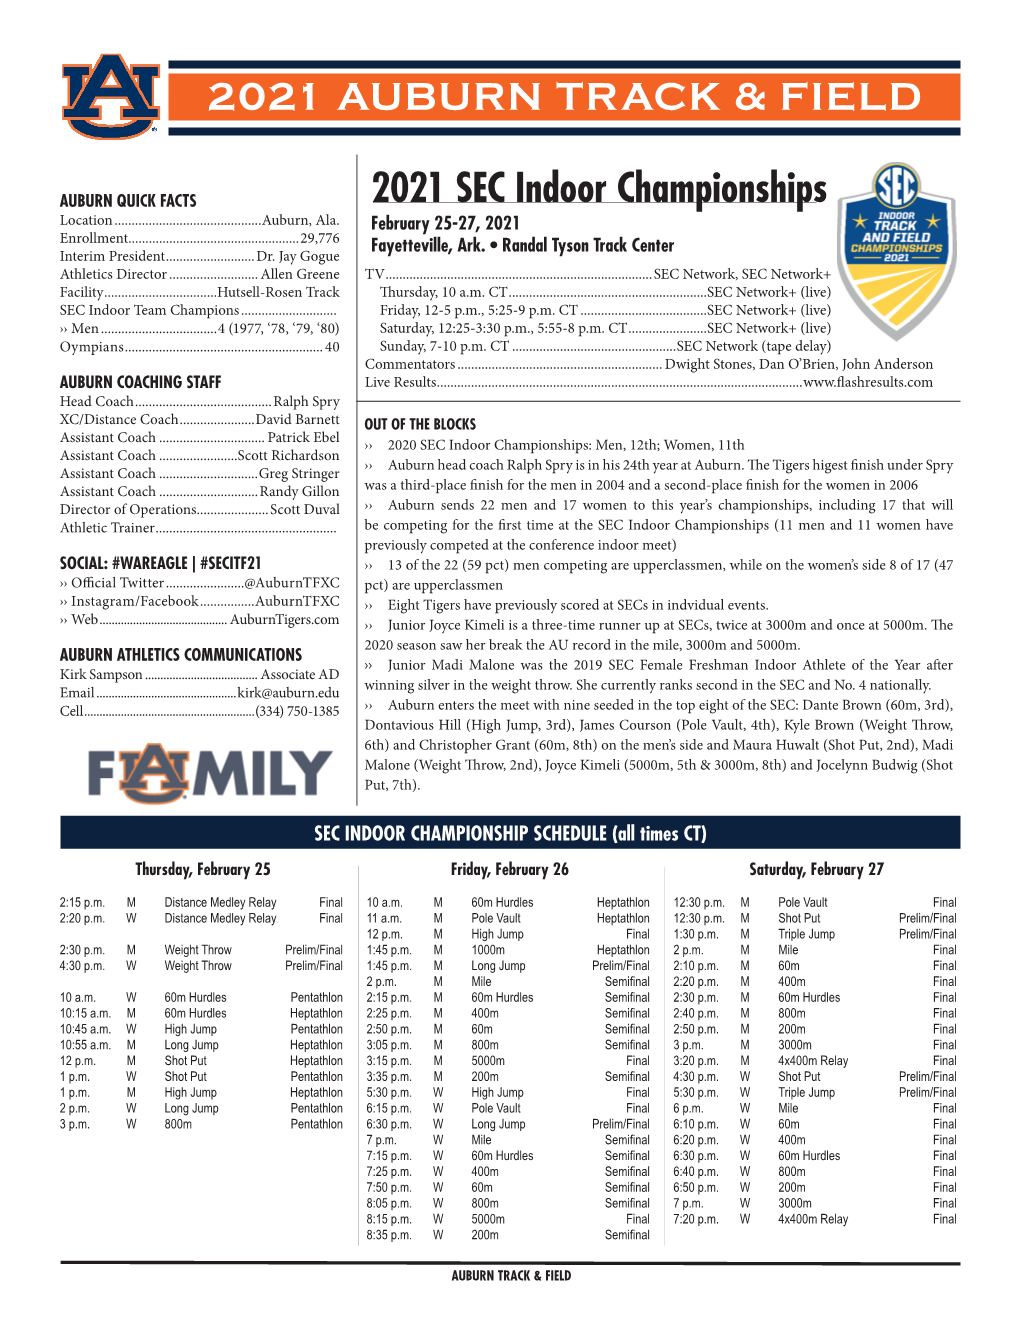 2021 SEC Indoor Championships Notes.Indd